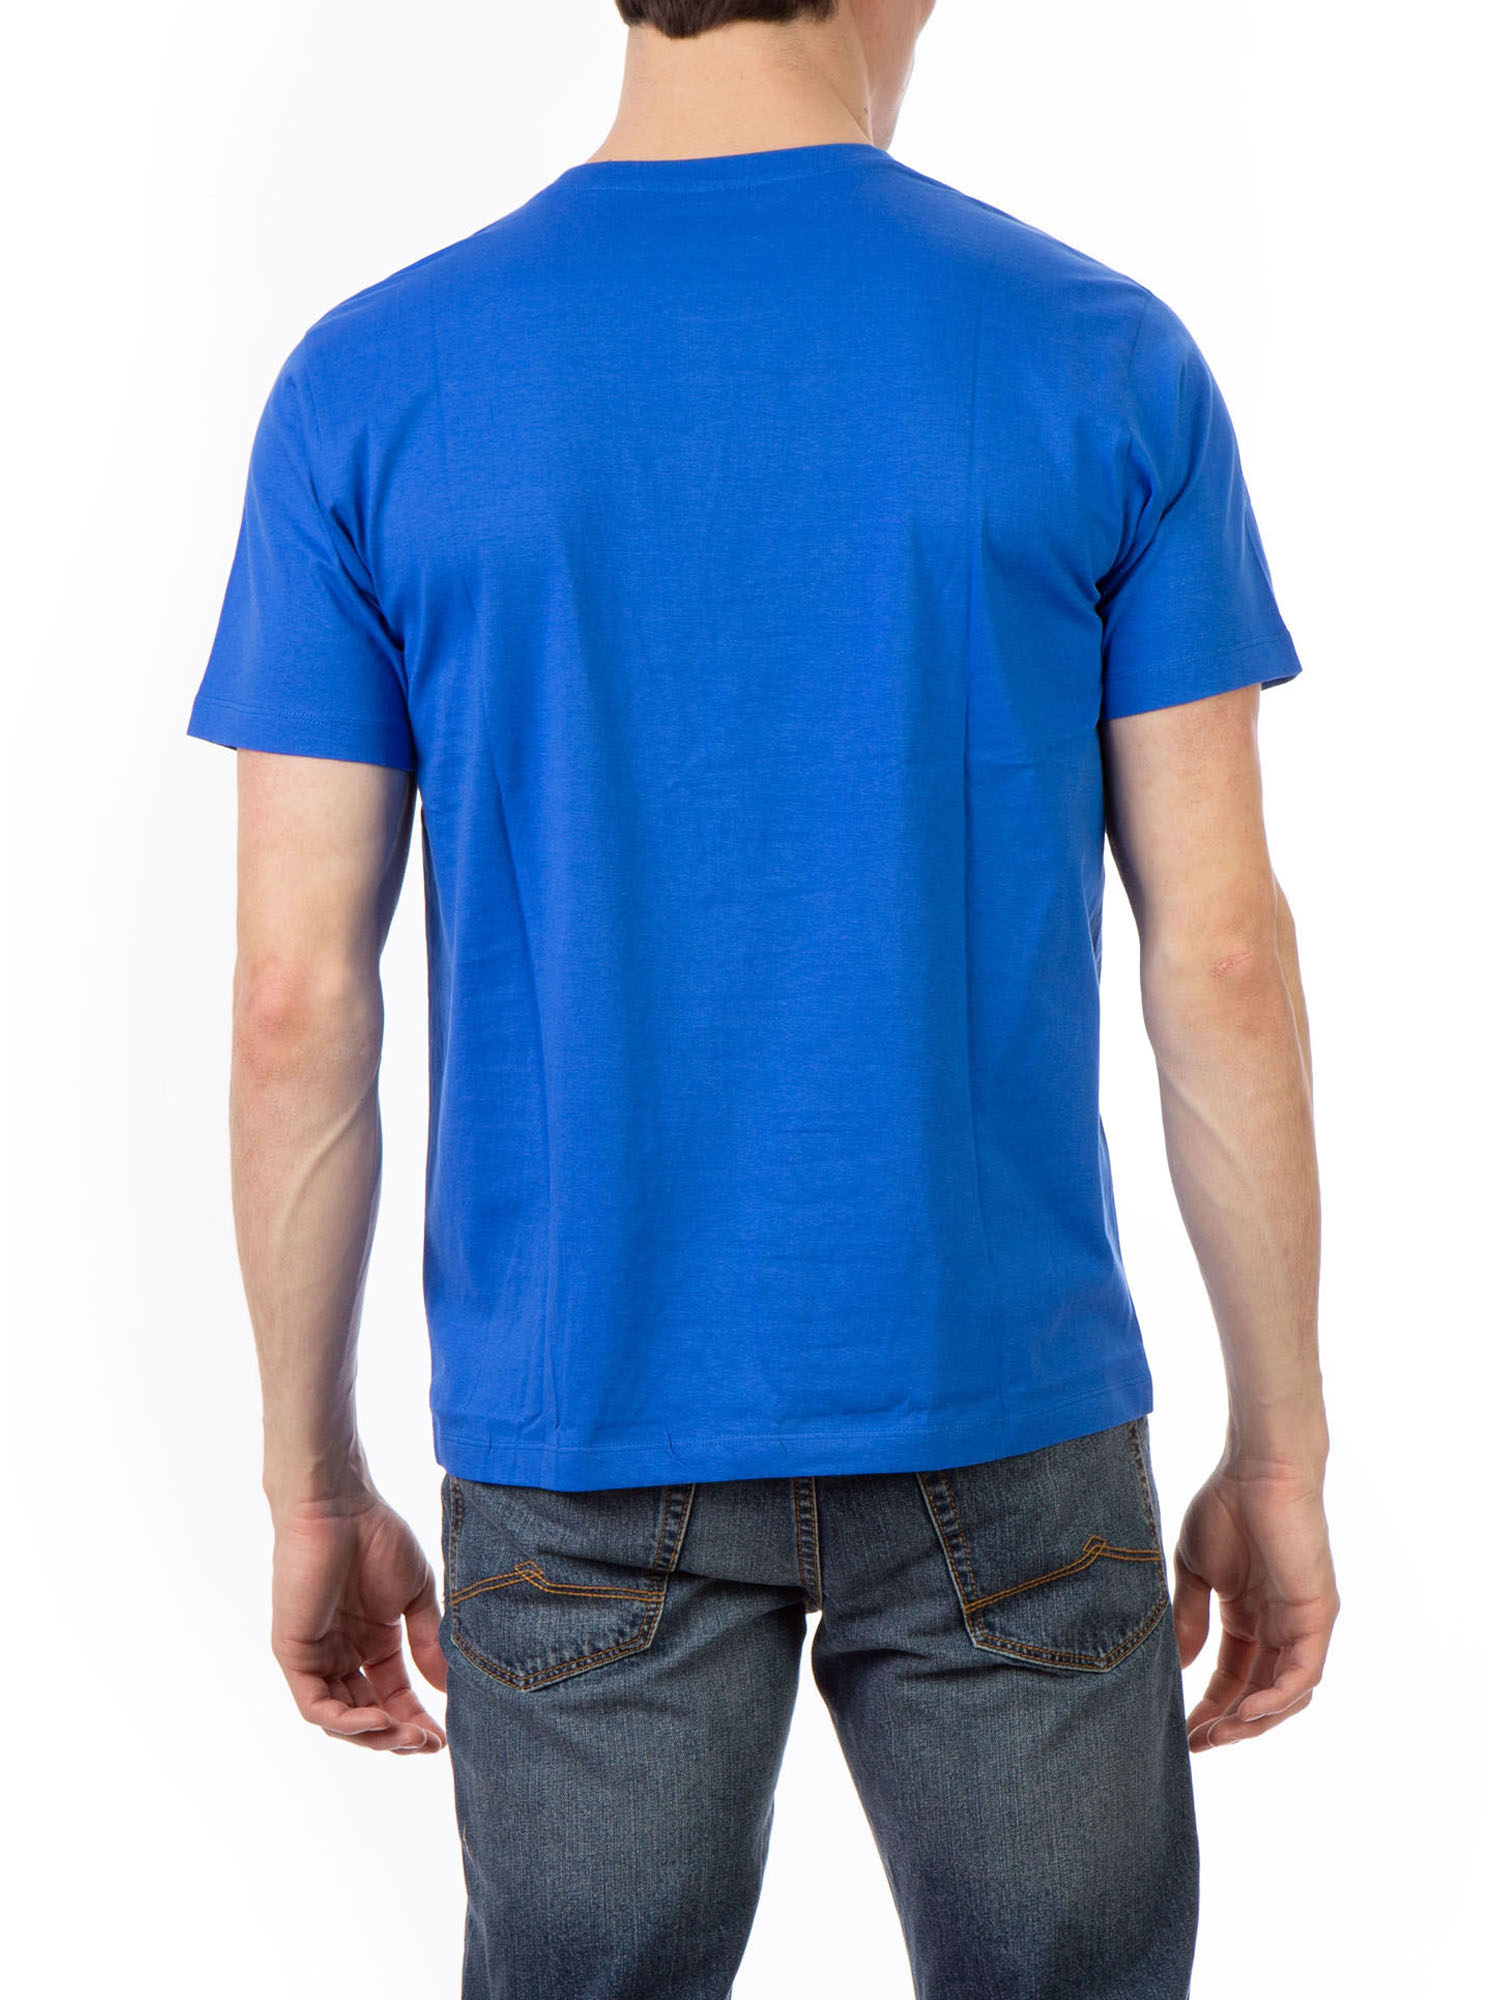 U.S. Polo Assn. Men's Pocket Knit T-Shirt - image 2 of 3